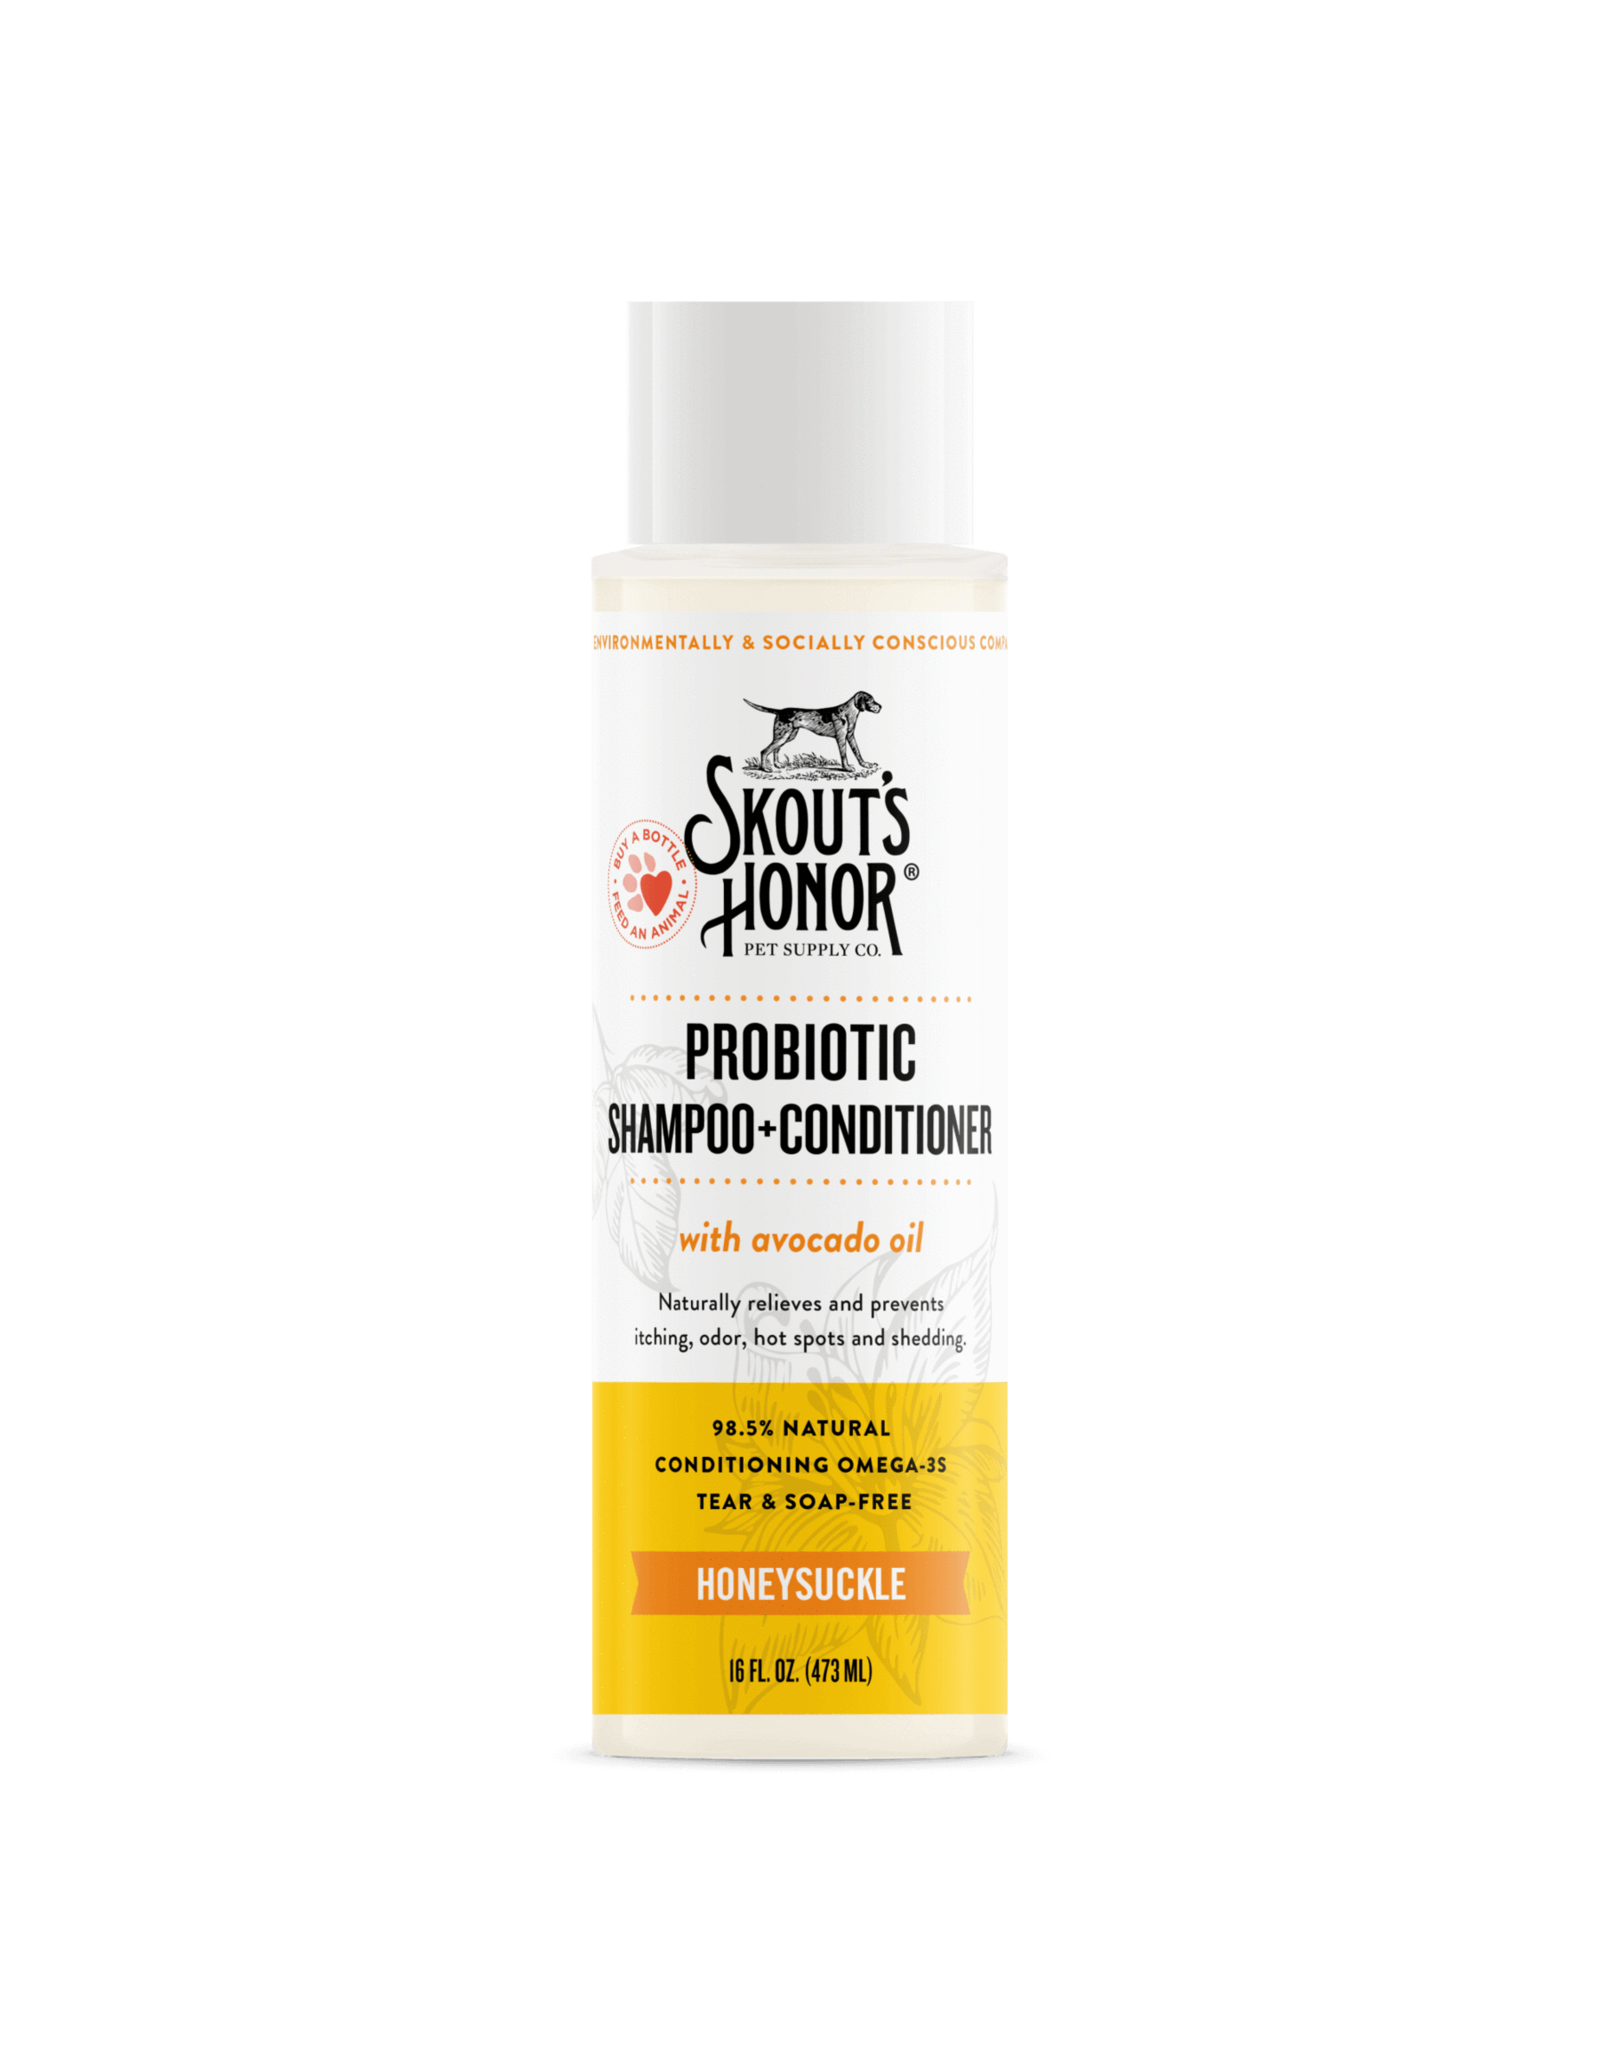 Skout's Honor Probiotic Shampoo & Conditioner